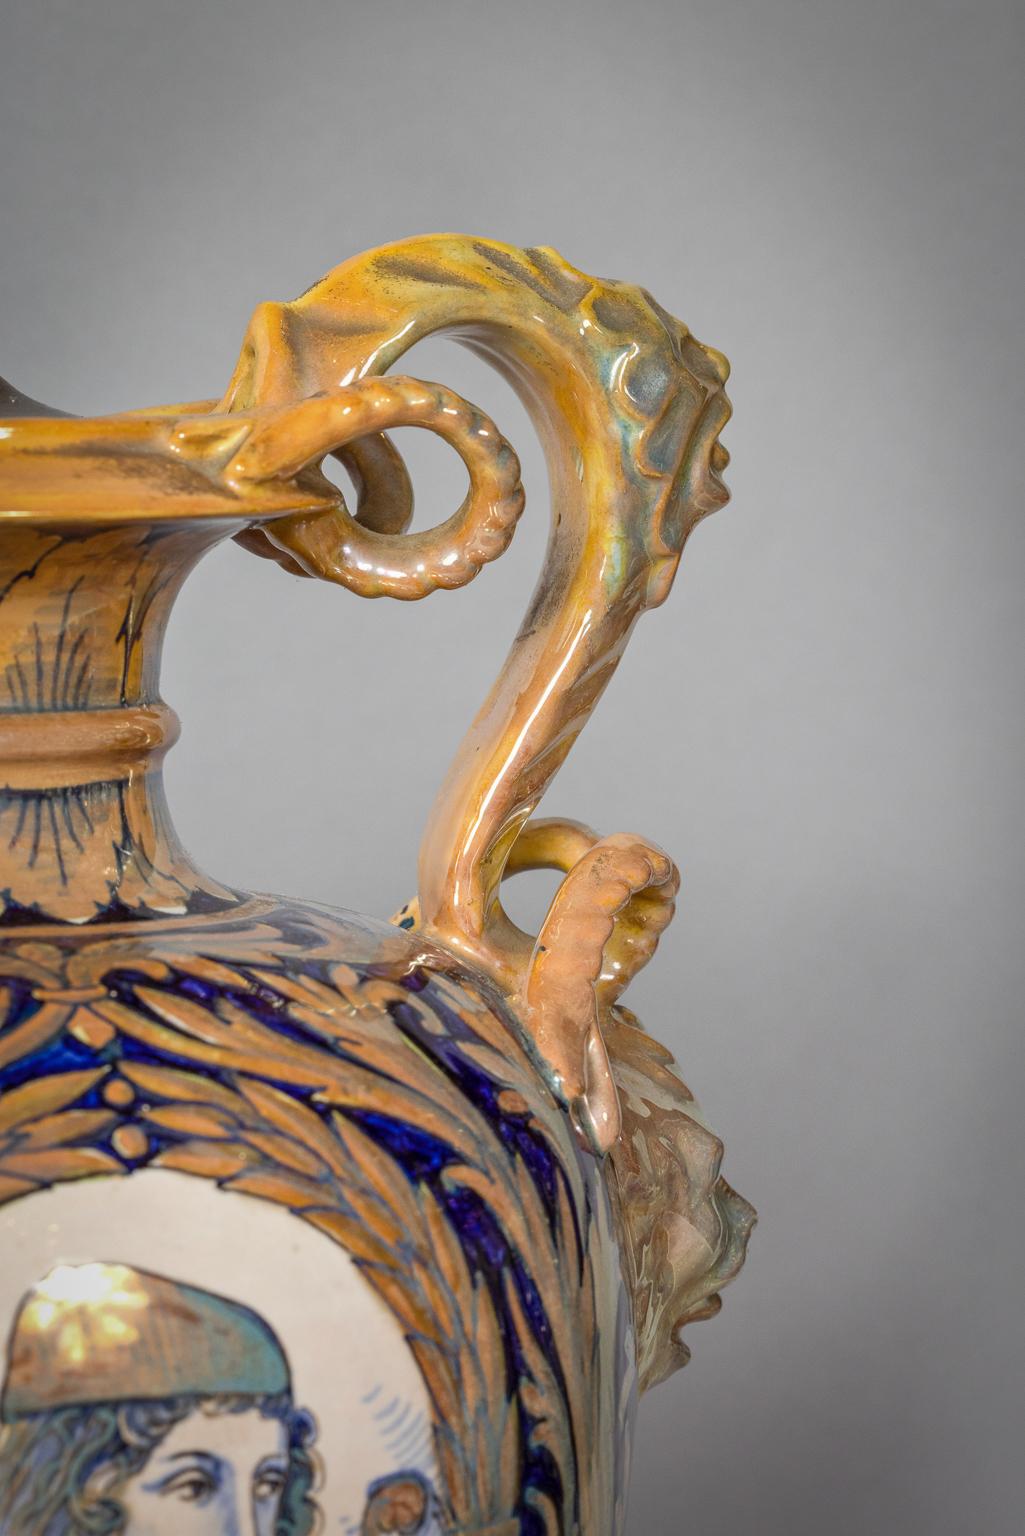 Urbino majolica lustre glazed scroll handled vases mounted as lamps.
Height of vase 15.5